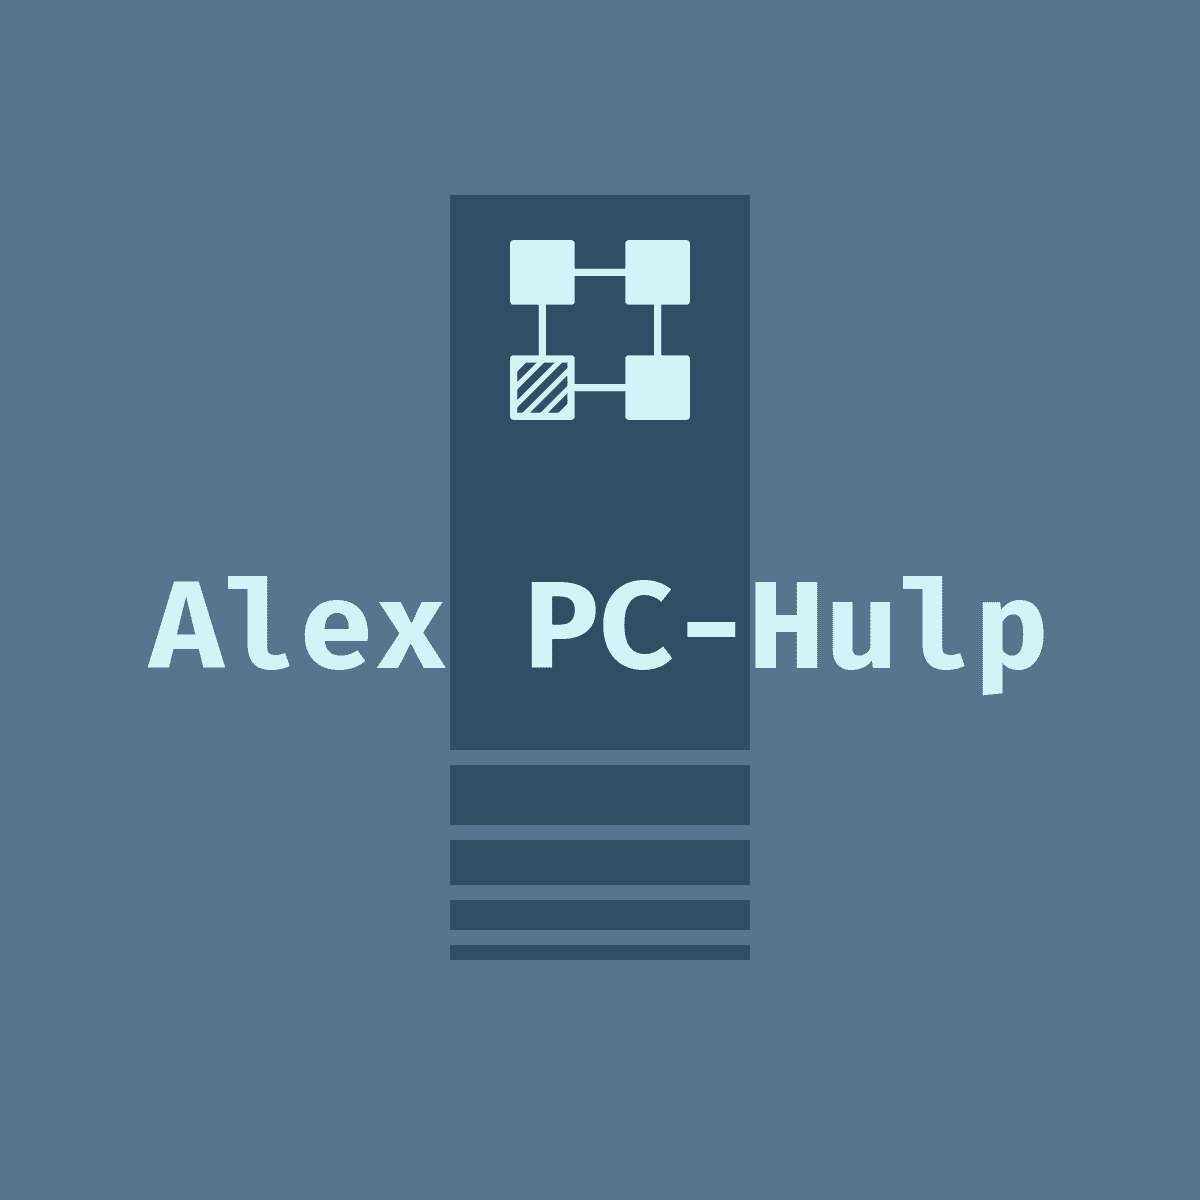 Alex PC Hulp